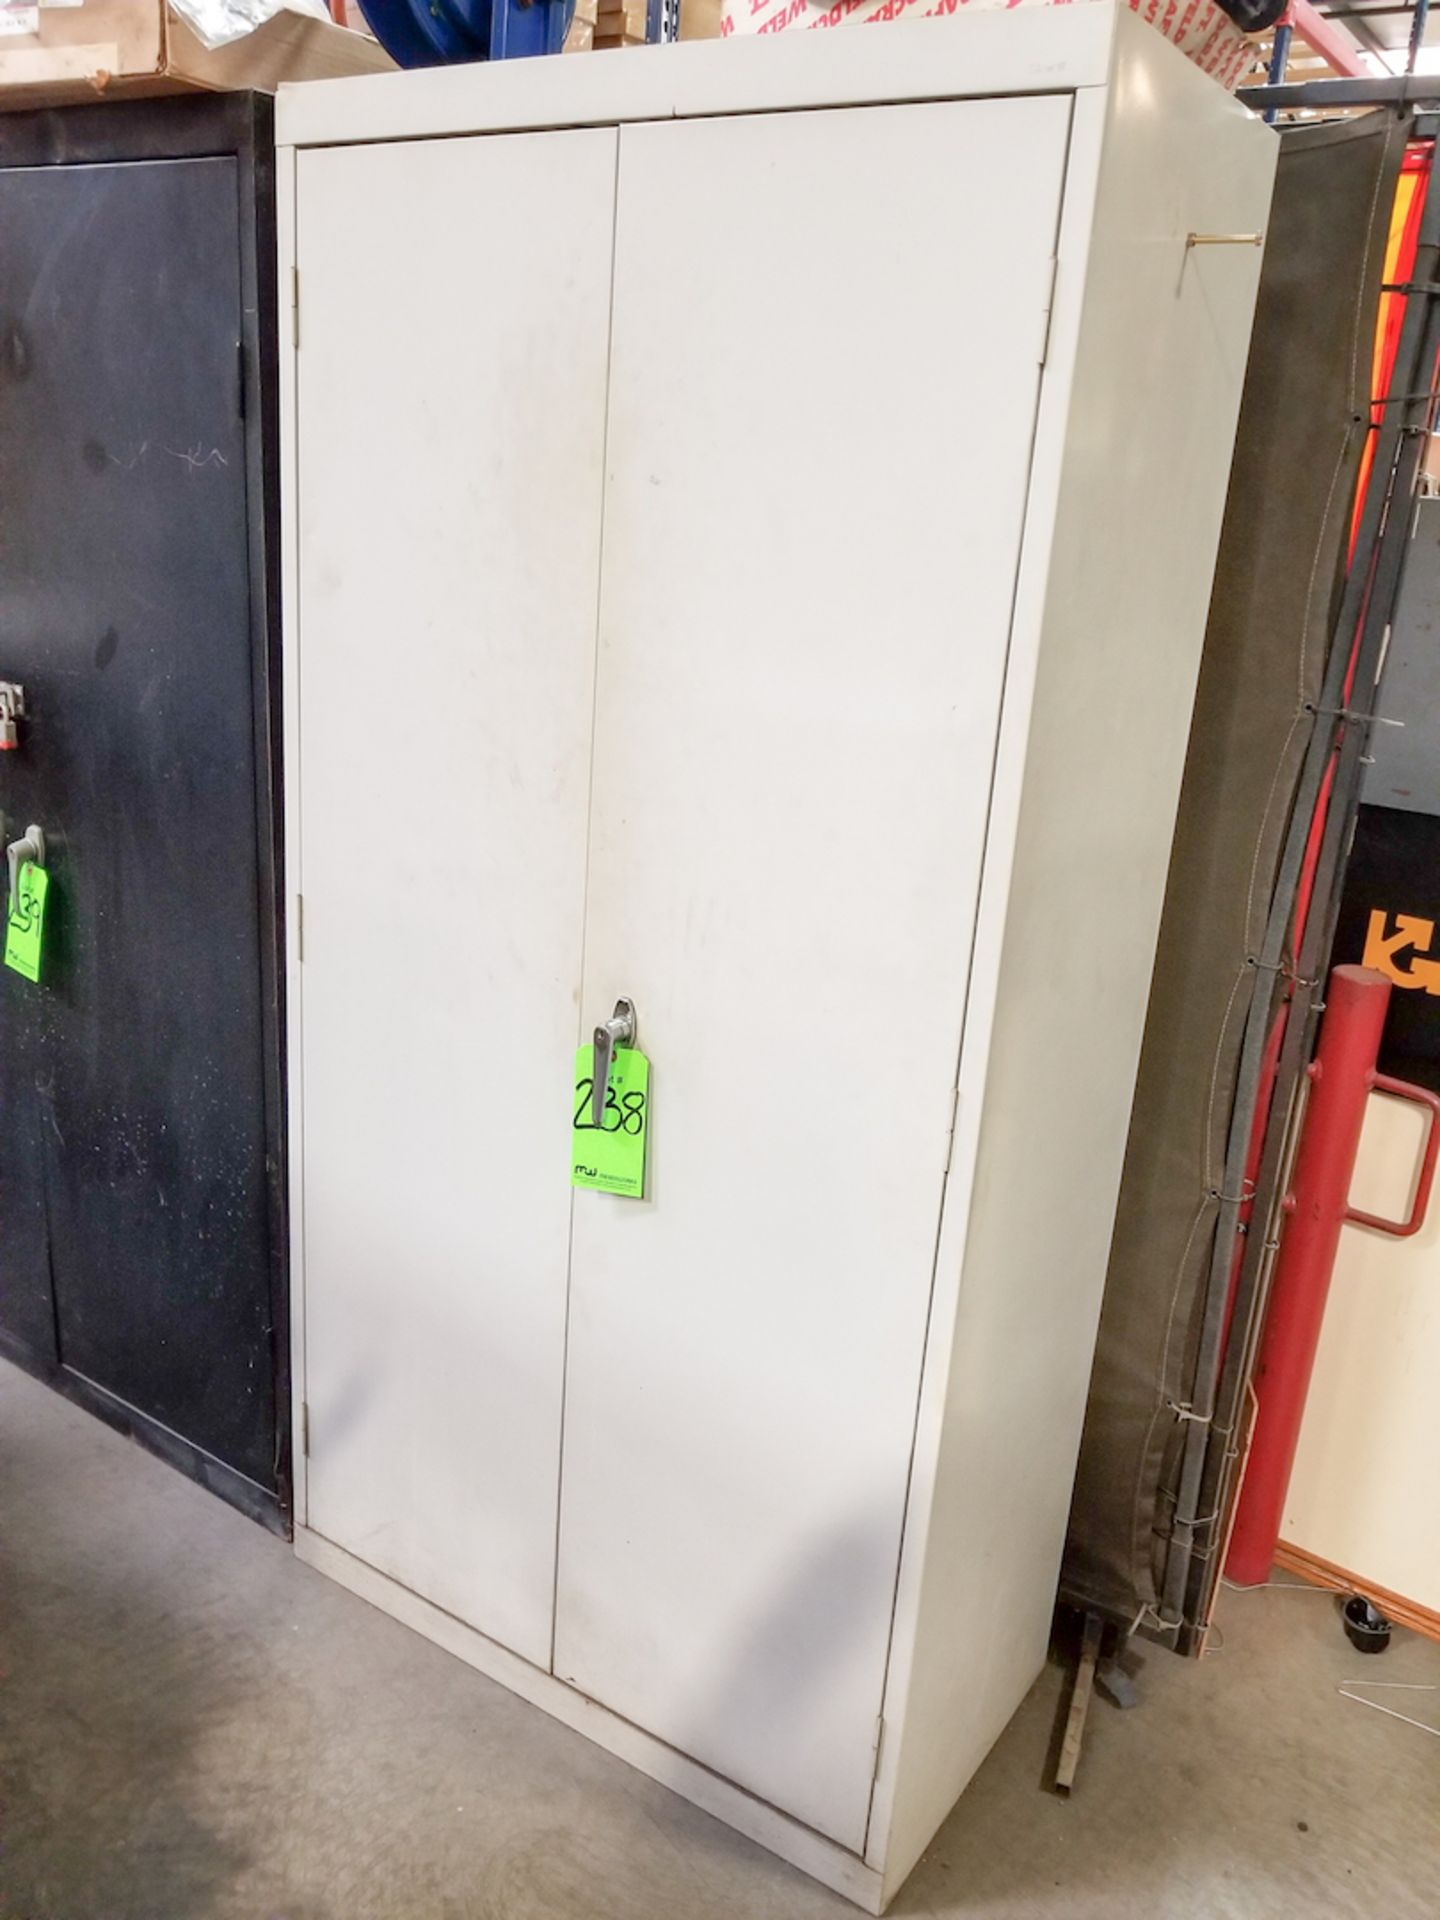 2-Door Metal Vertical Storage Cabinet with Contents to Include: Extension Cords, etc.